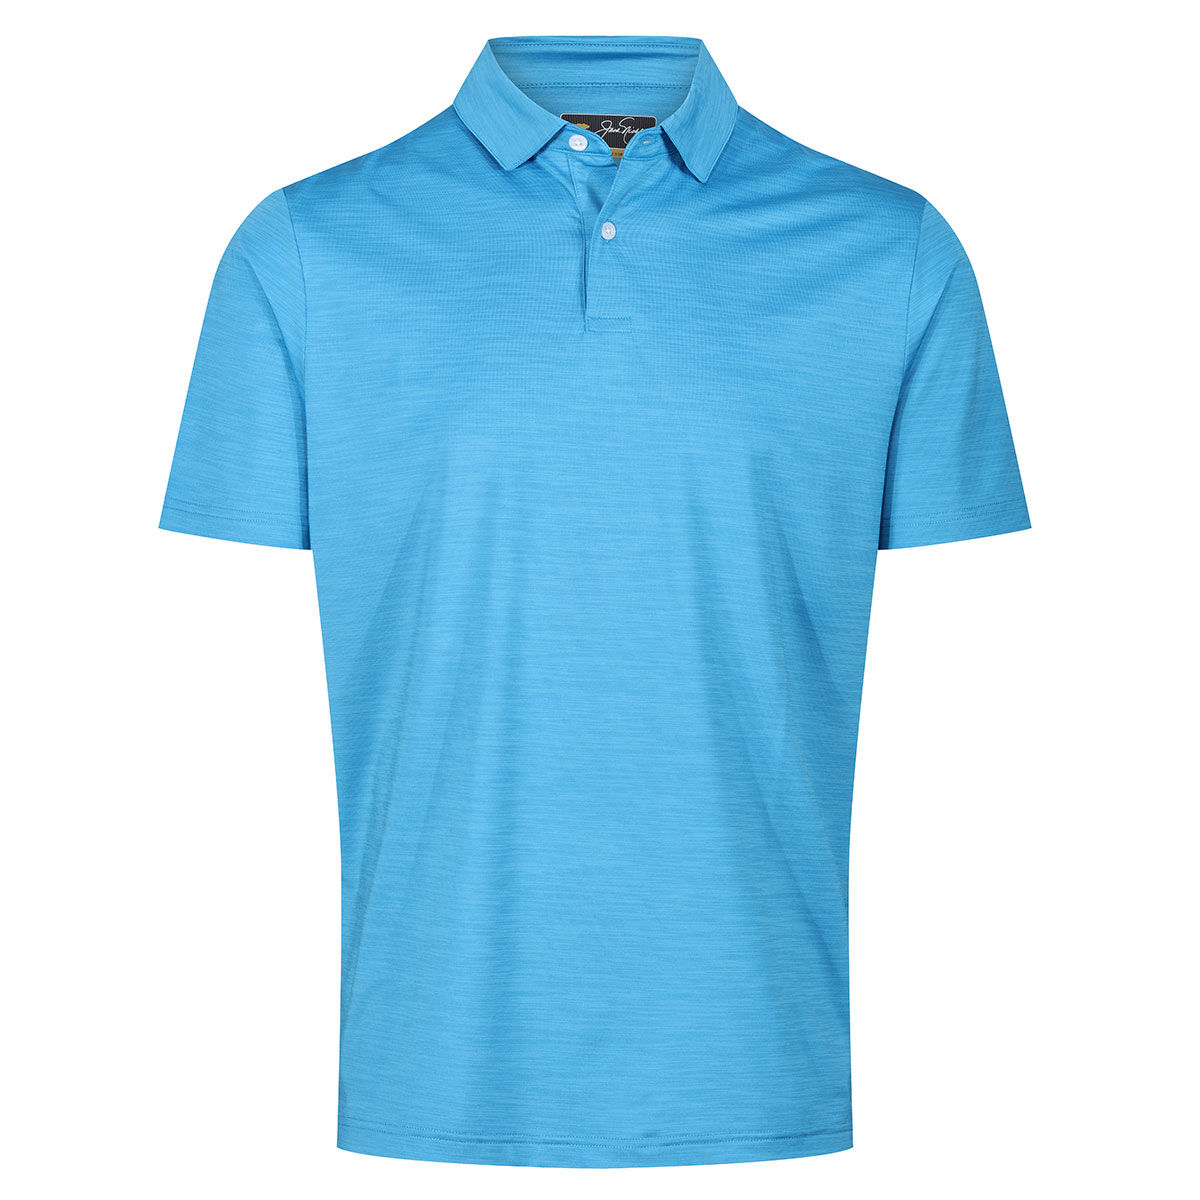 Jack Nicklaus Men's Tonal Golf Polo Shirt, Mens, Light blue, Small | American Golf von Jack Nicklaus